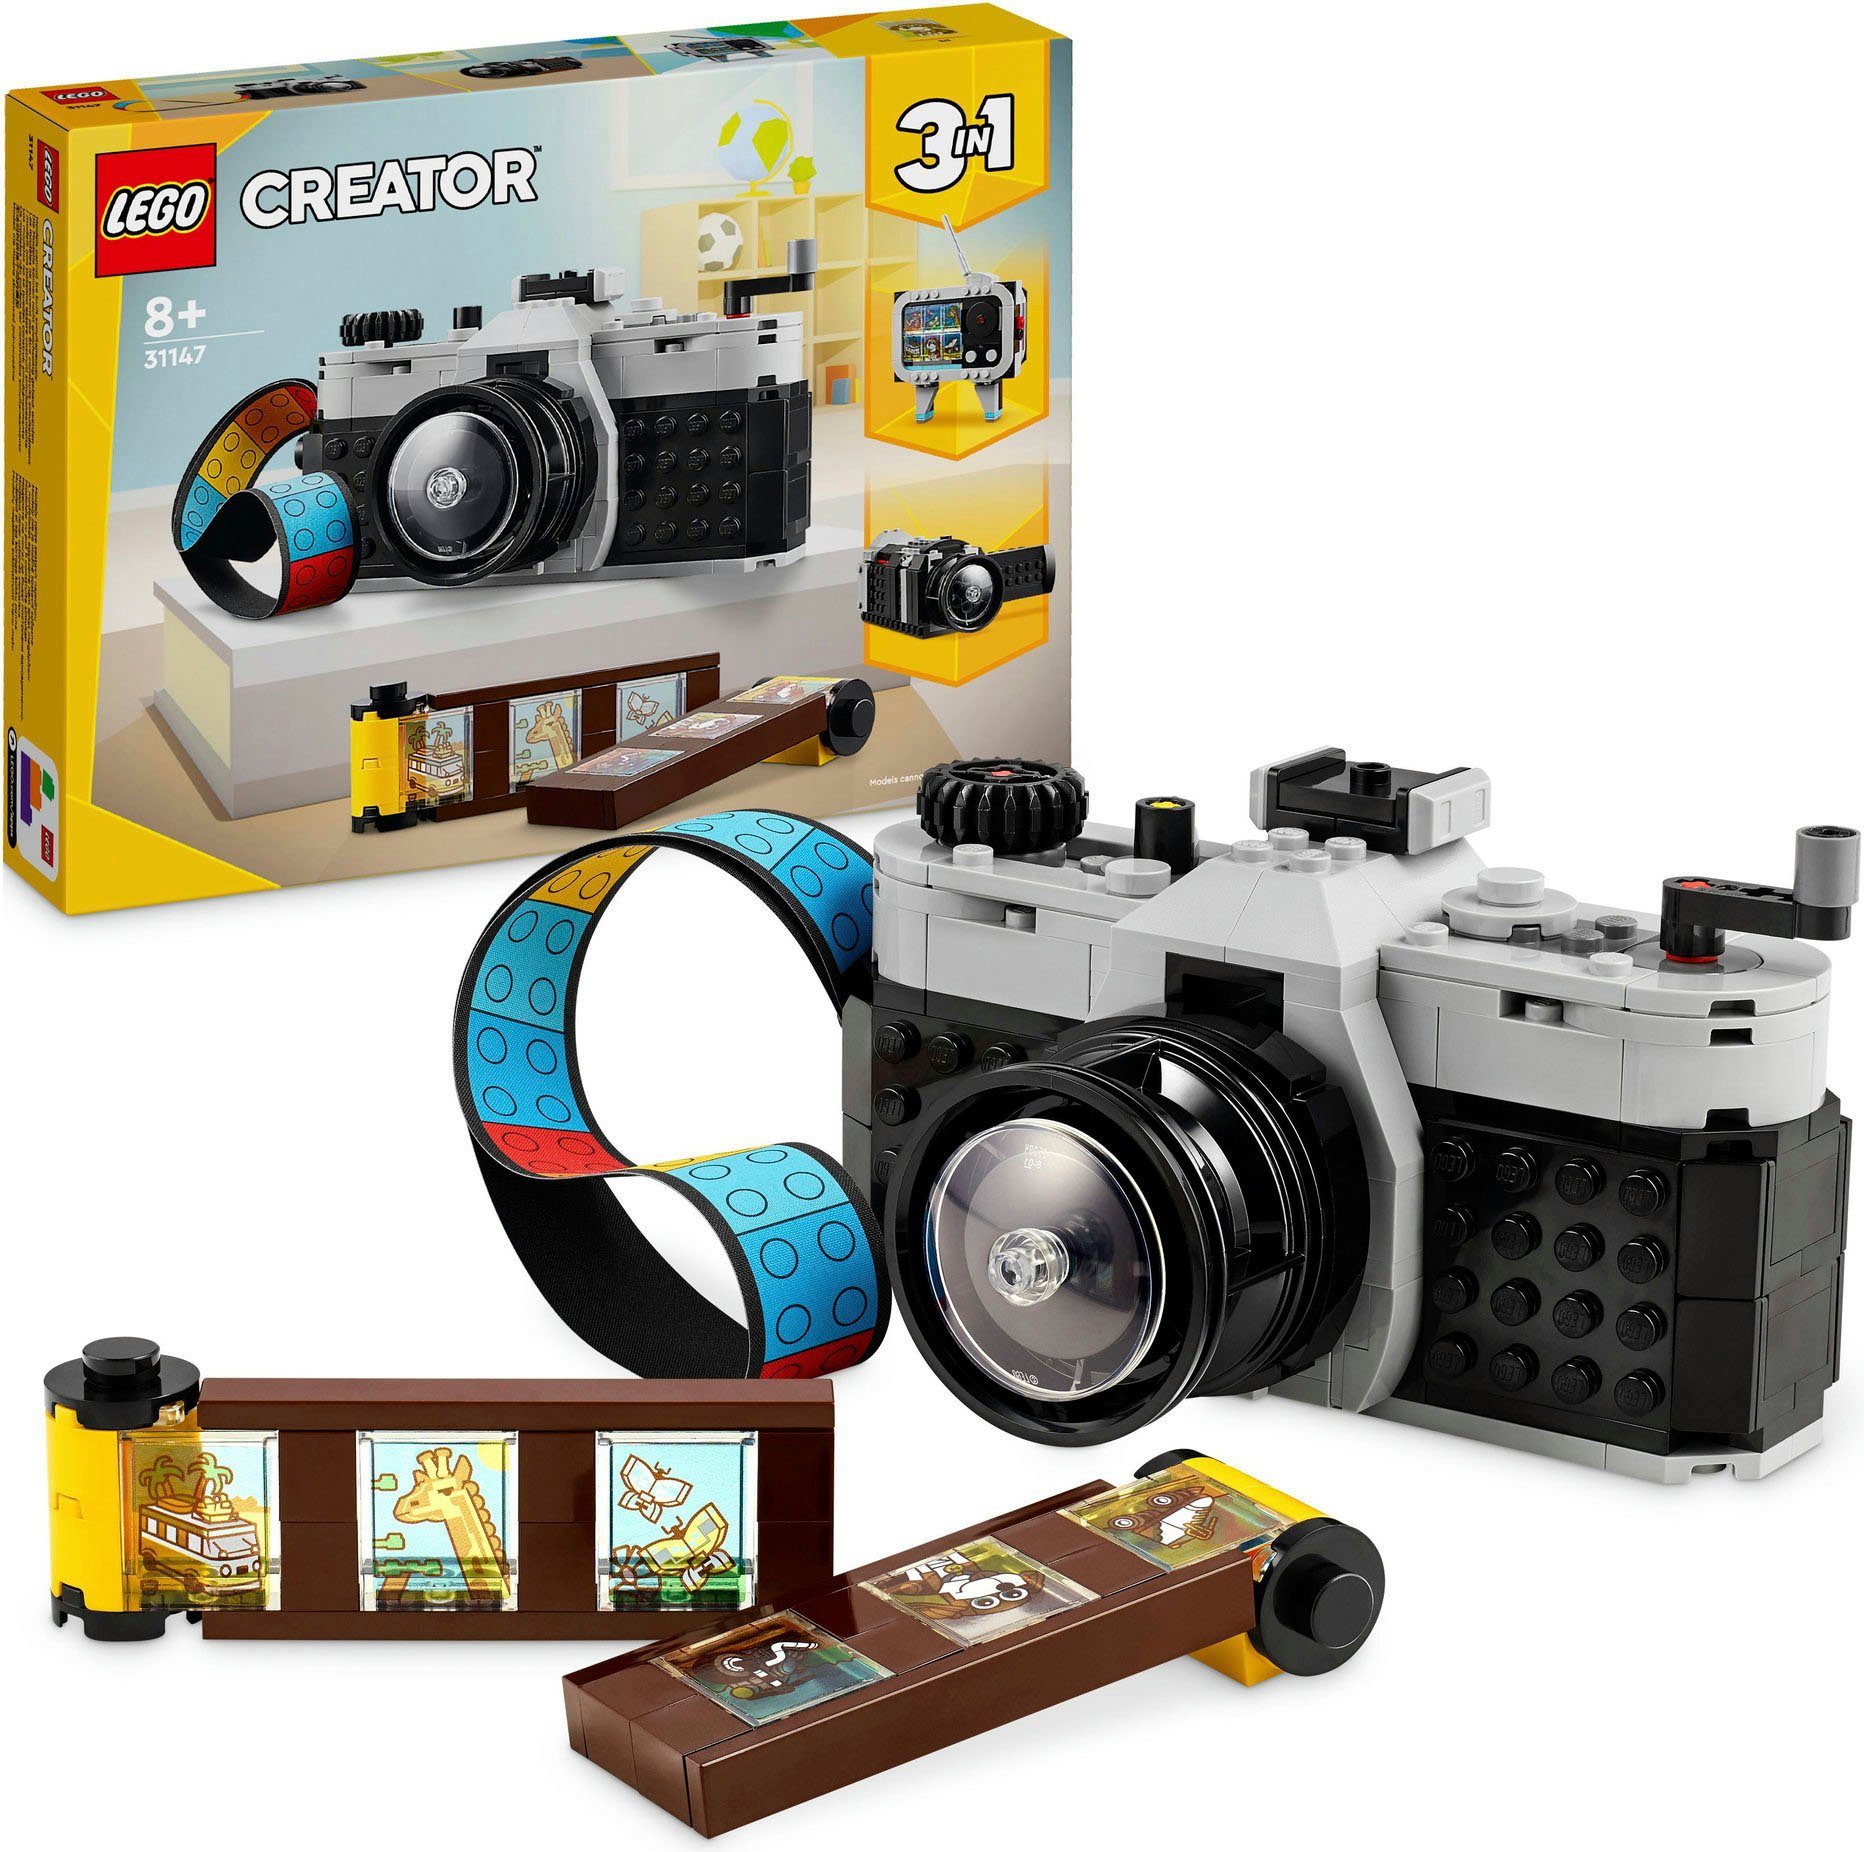 LEGO® Konstruktionsspielsteine Retro Kamera (31147), LEGO Creator 3in1, (261 St), Made in Europe